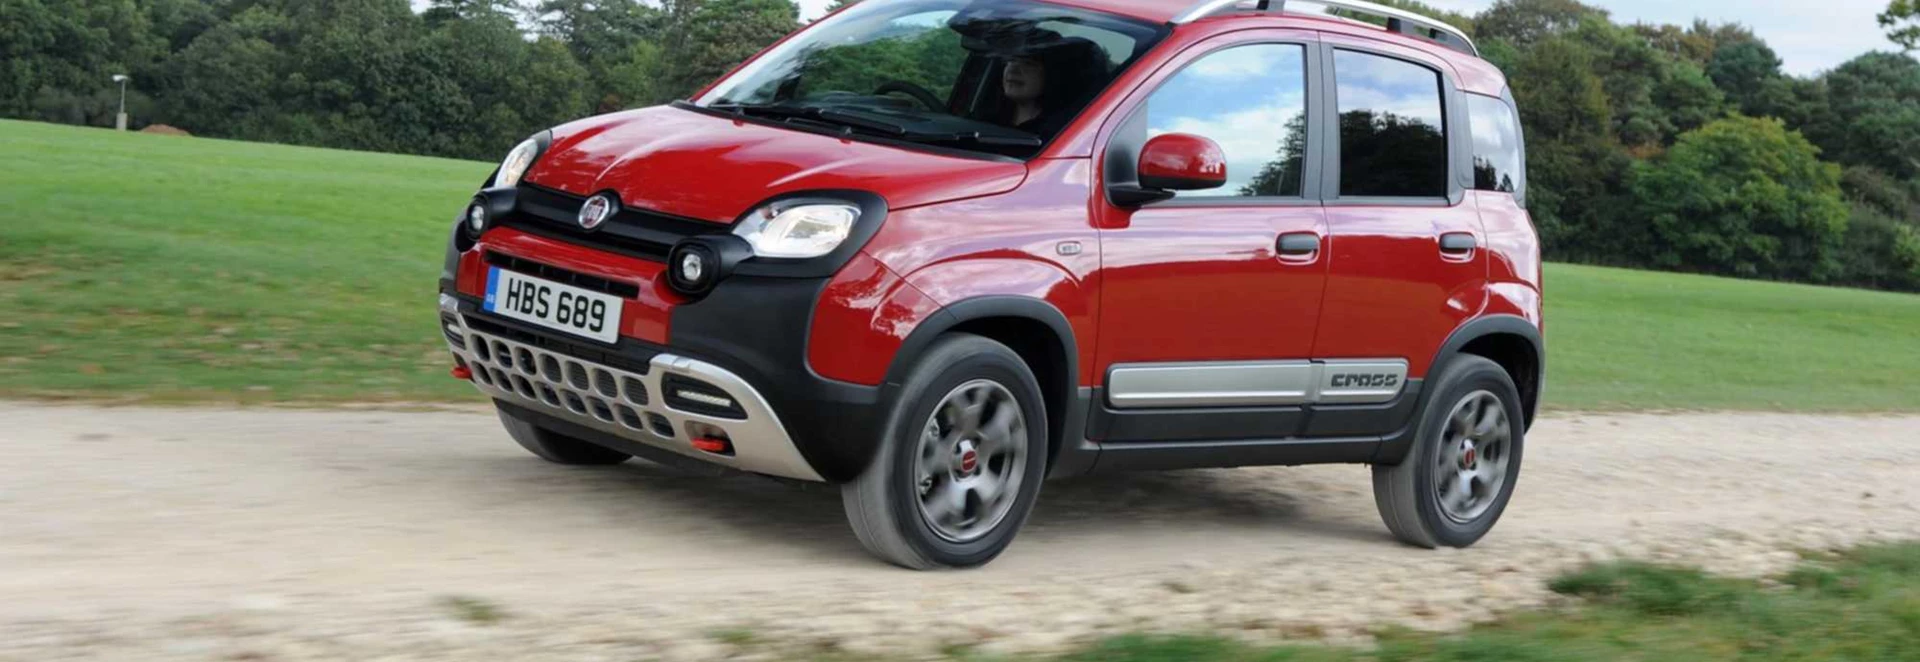 The Fiat Panda 4x4 – Italy's Toughest Little Four-Wheel Drive